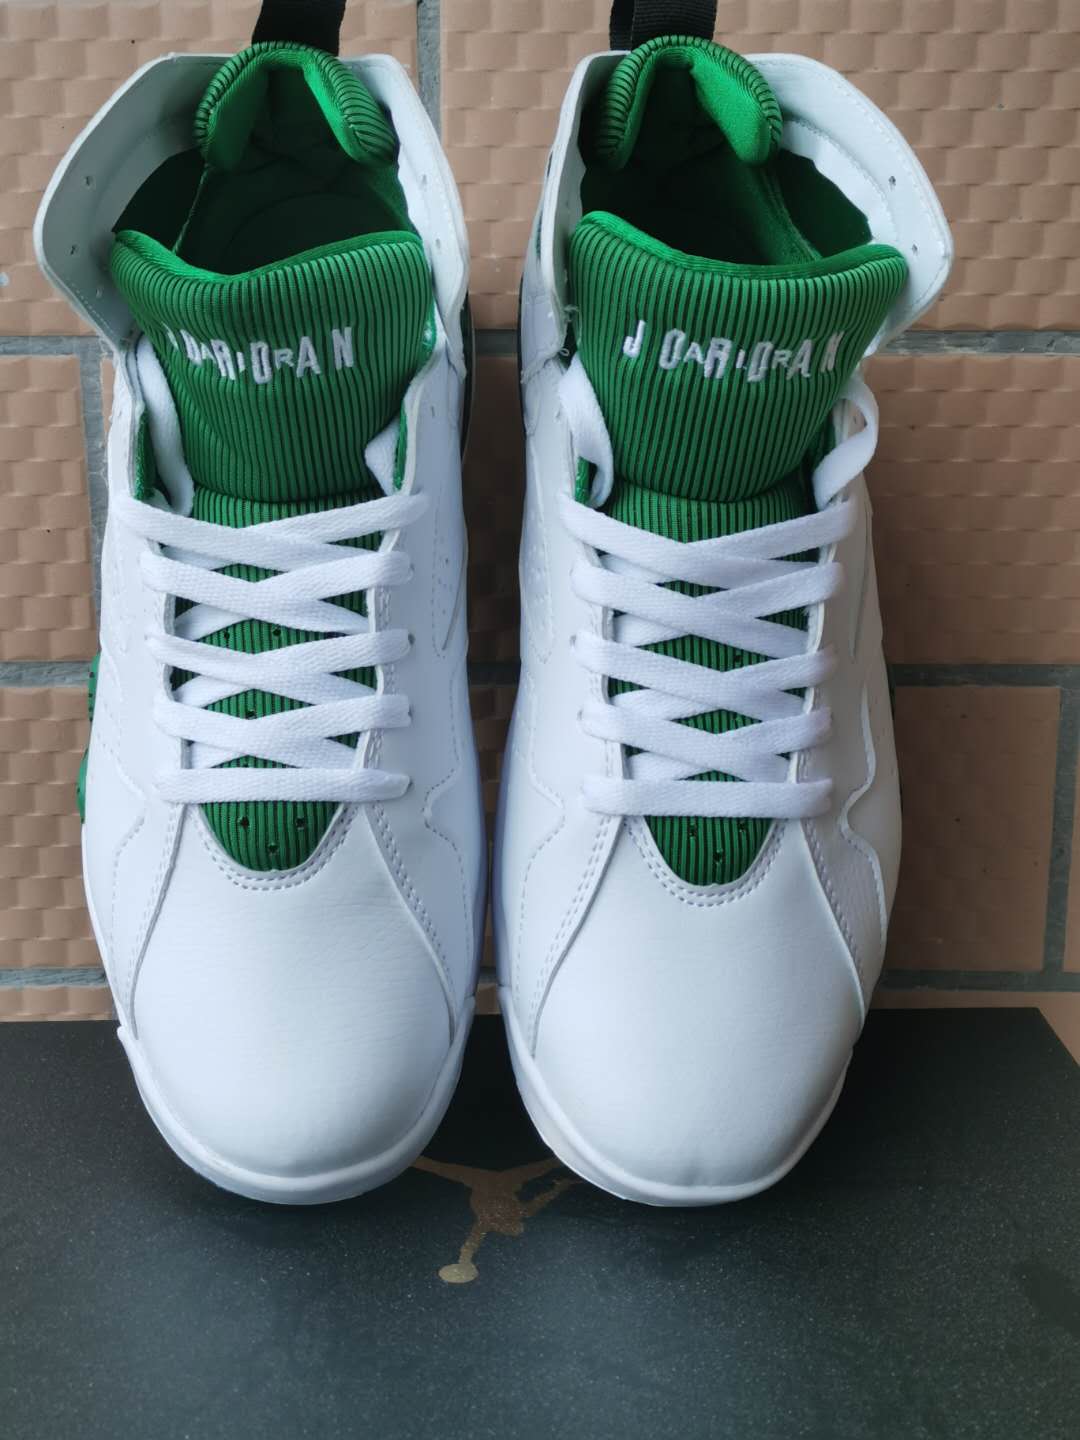 New Men Air Jordan 7 Shoes White Green